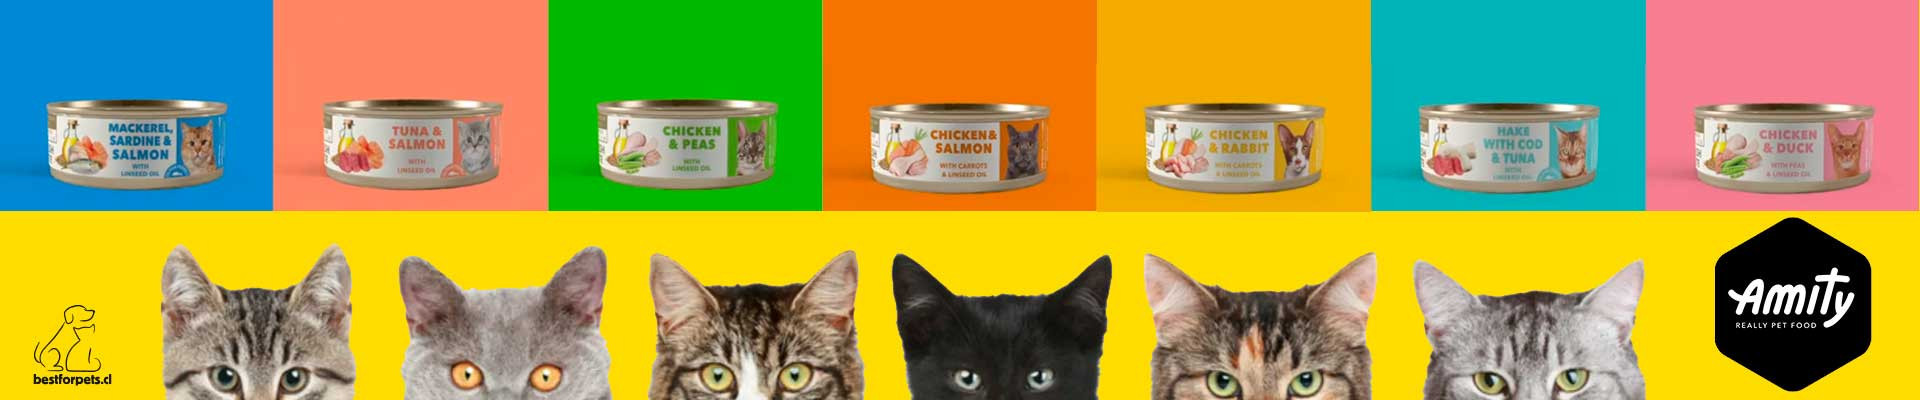 Alimentos Amity para gatos